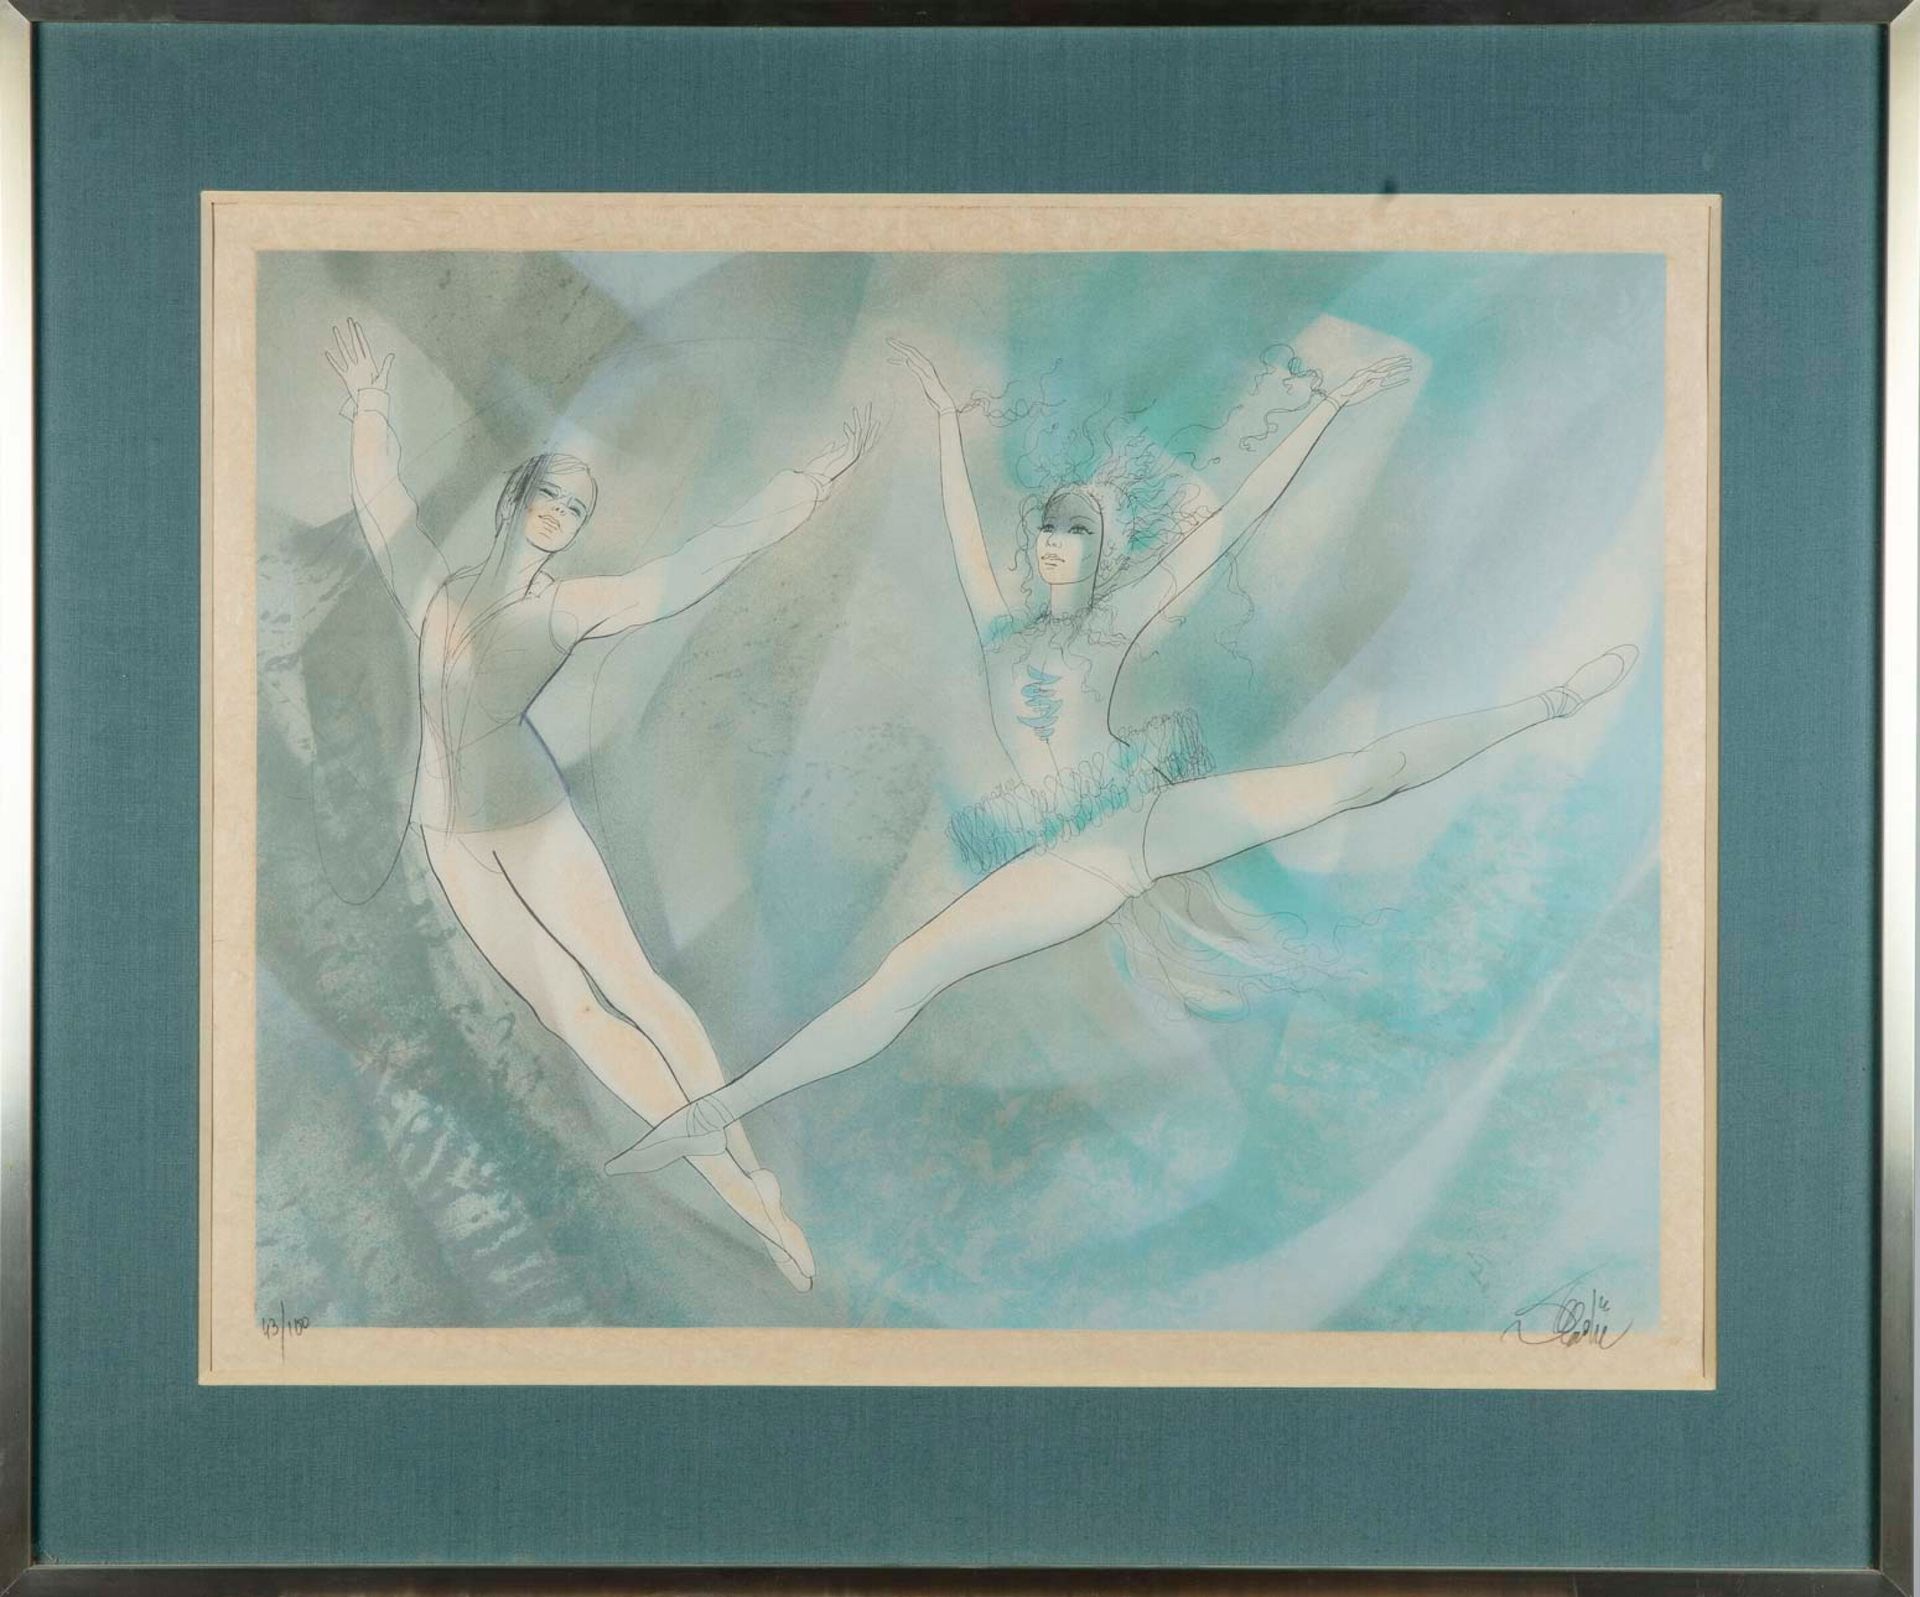 VALADIE Jean-Baptiste VALADIE (1933)

The Dancers 

Lithograph on Japan paper

S&hellip;